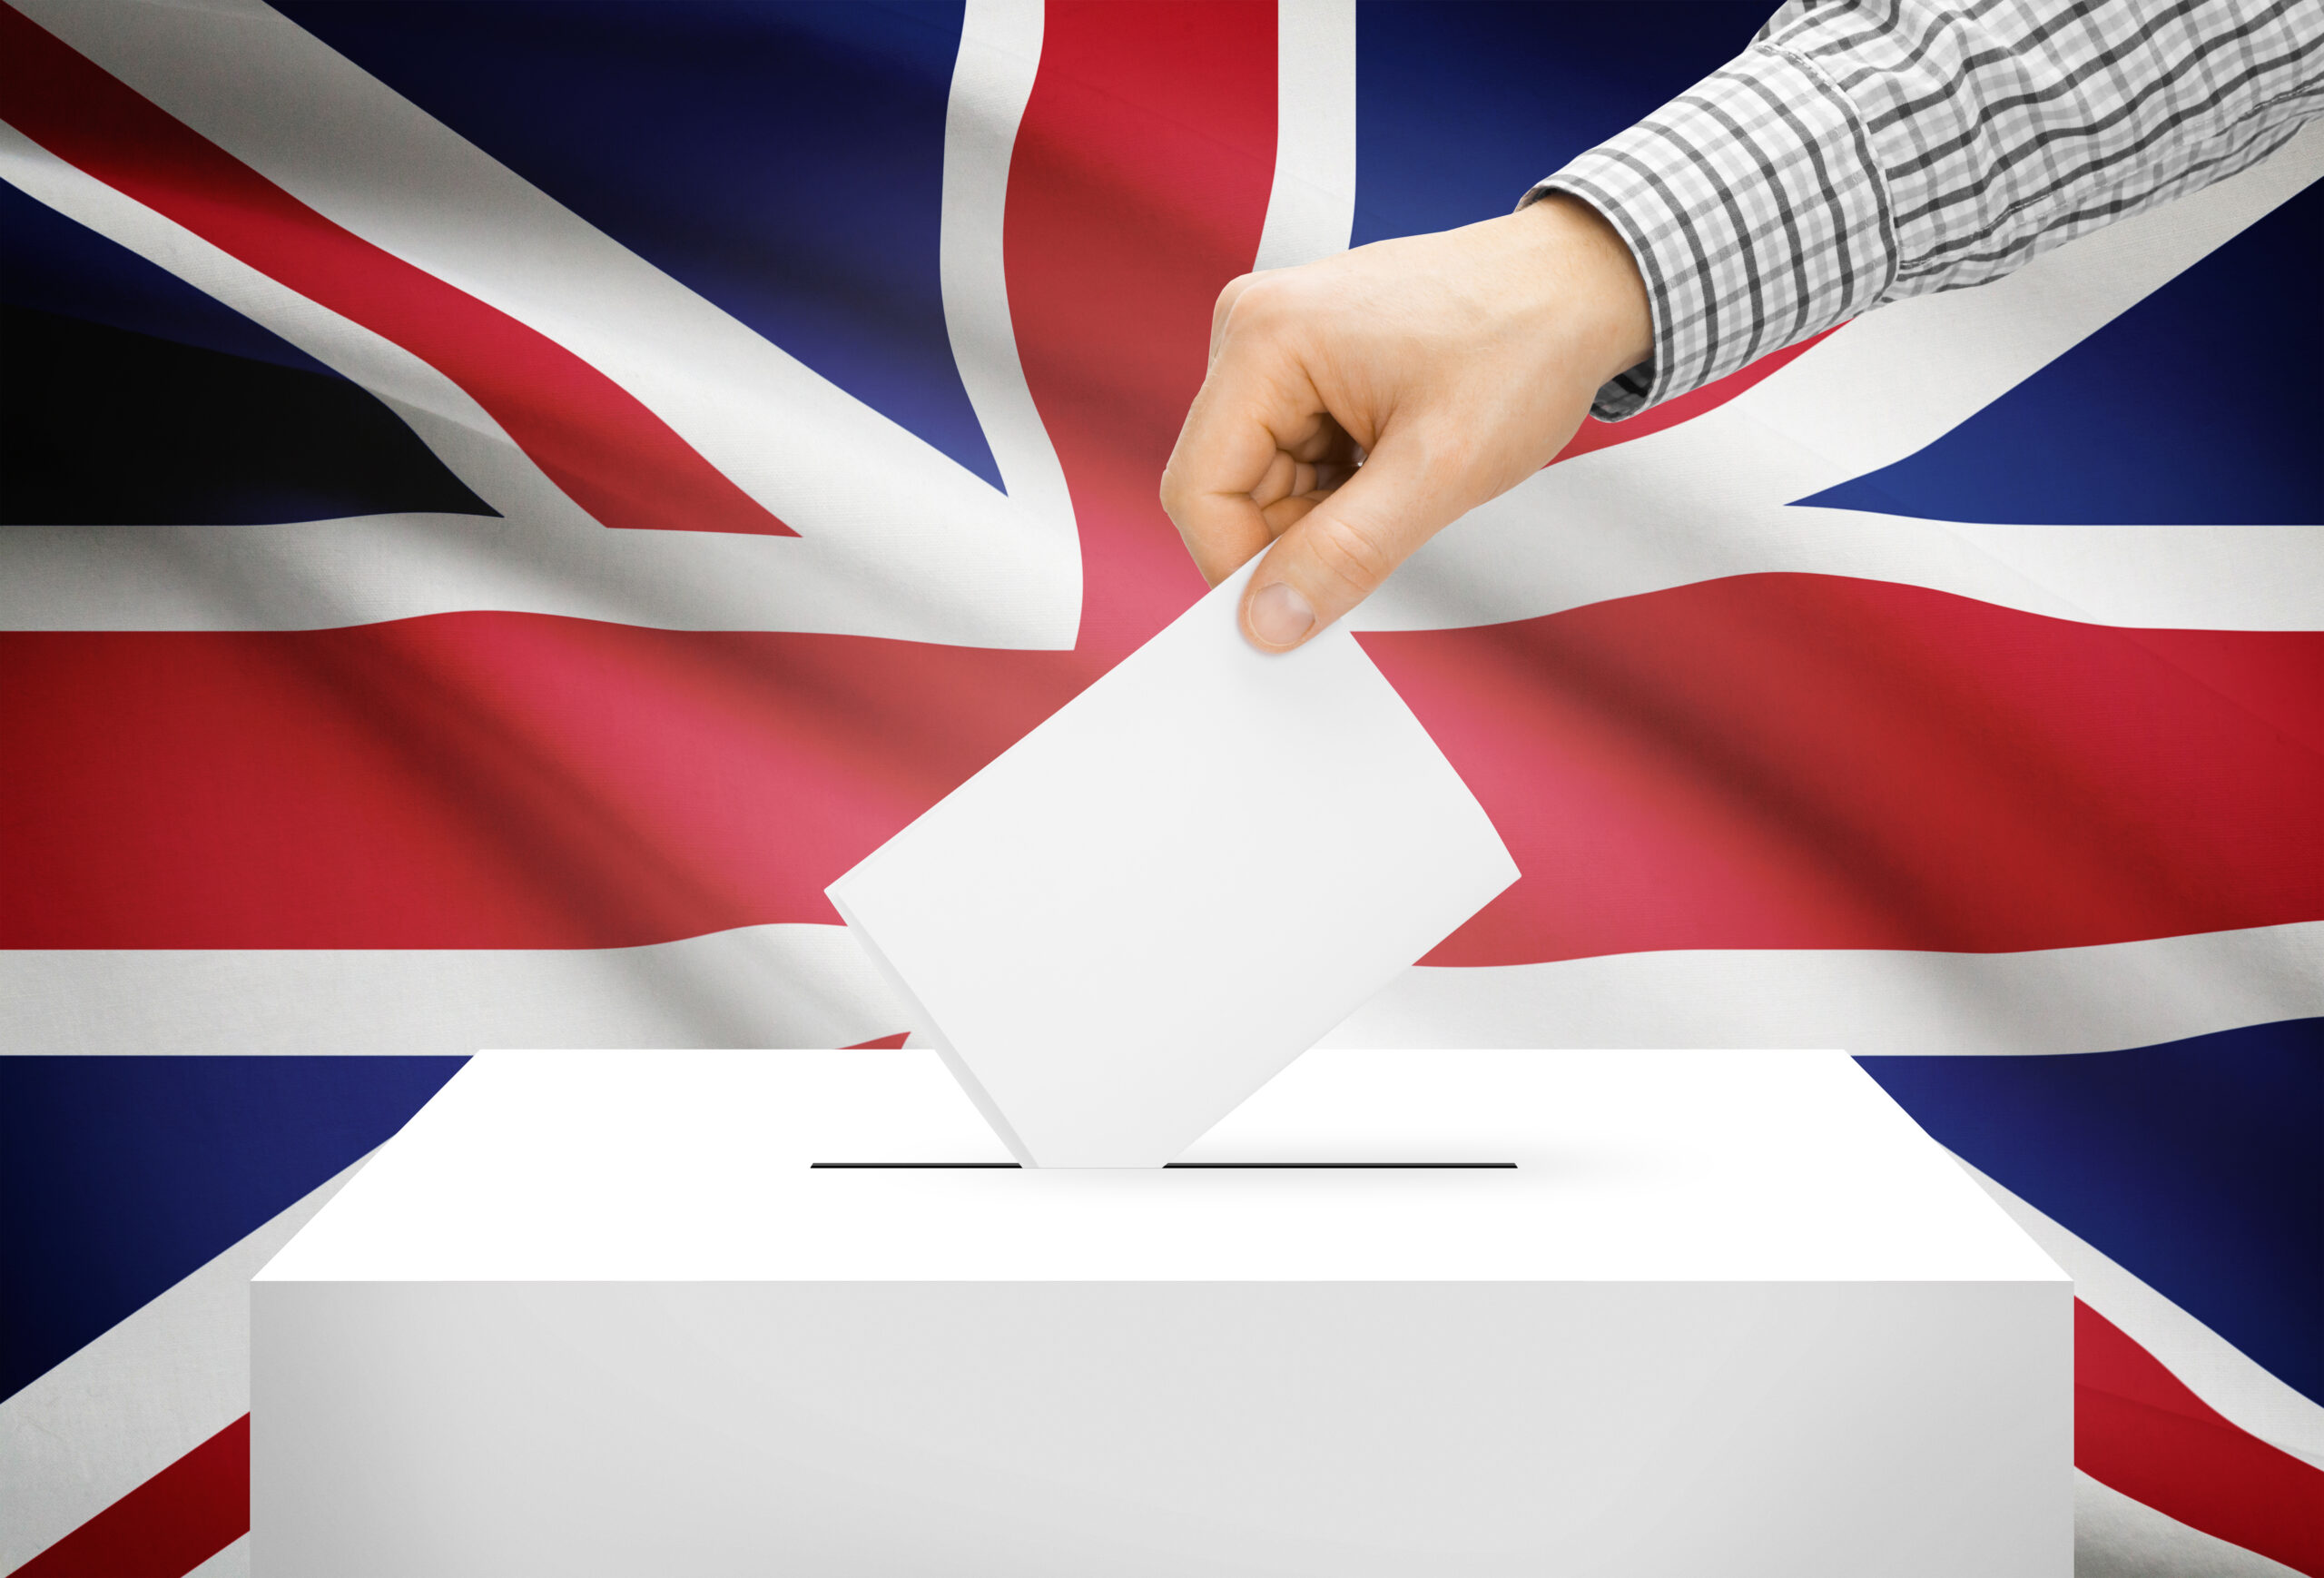 alegeri-anticipate-in-marea-britanie-pe-4-iulie.-laburistii-ar-putea-reveni-la-putere-dupa-14-ani